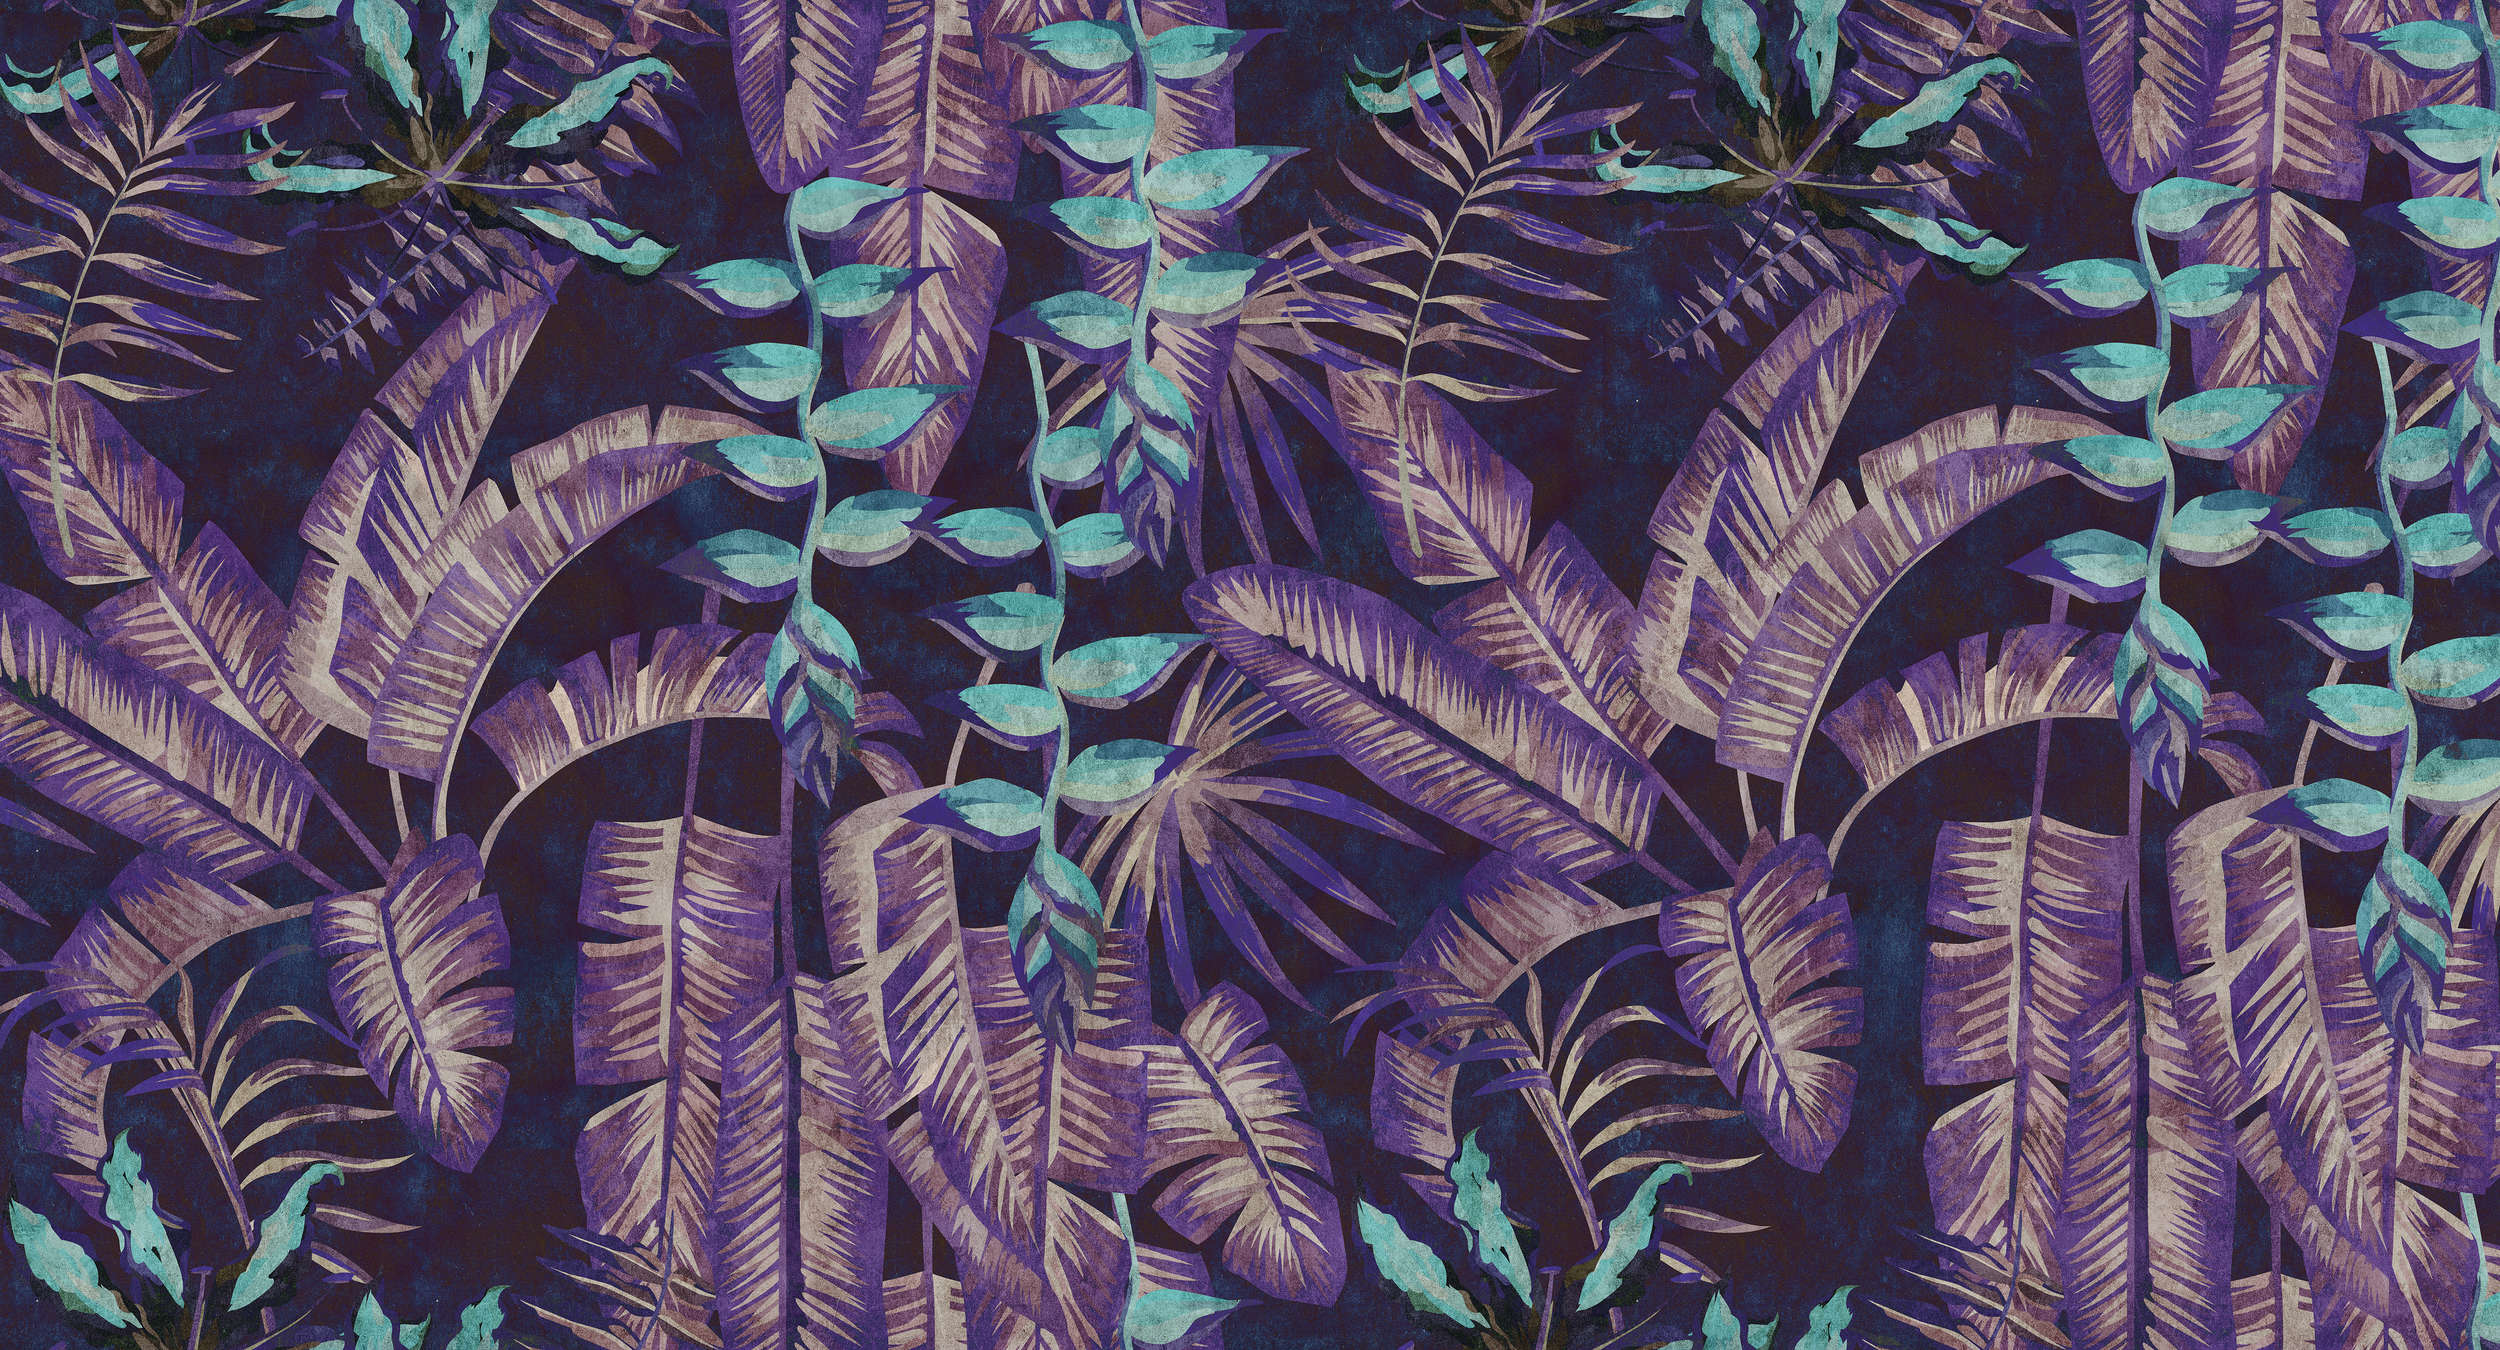             Tropicana 6 - digitaal print behang in vloeipapierstructuur met jungle motief - turquoise, violet | parelmoer glad vlies
        